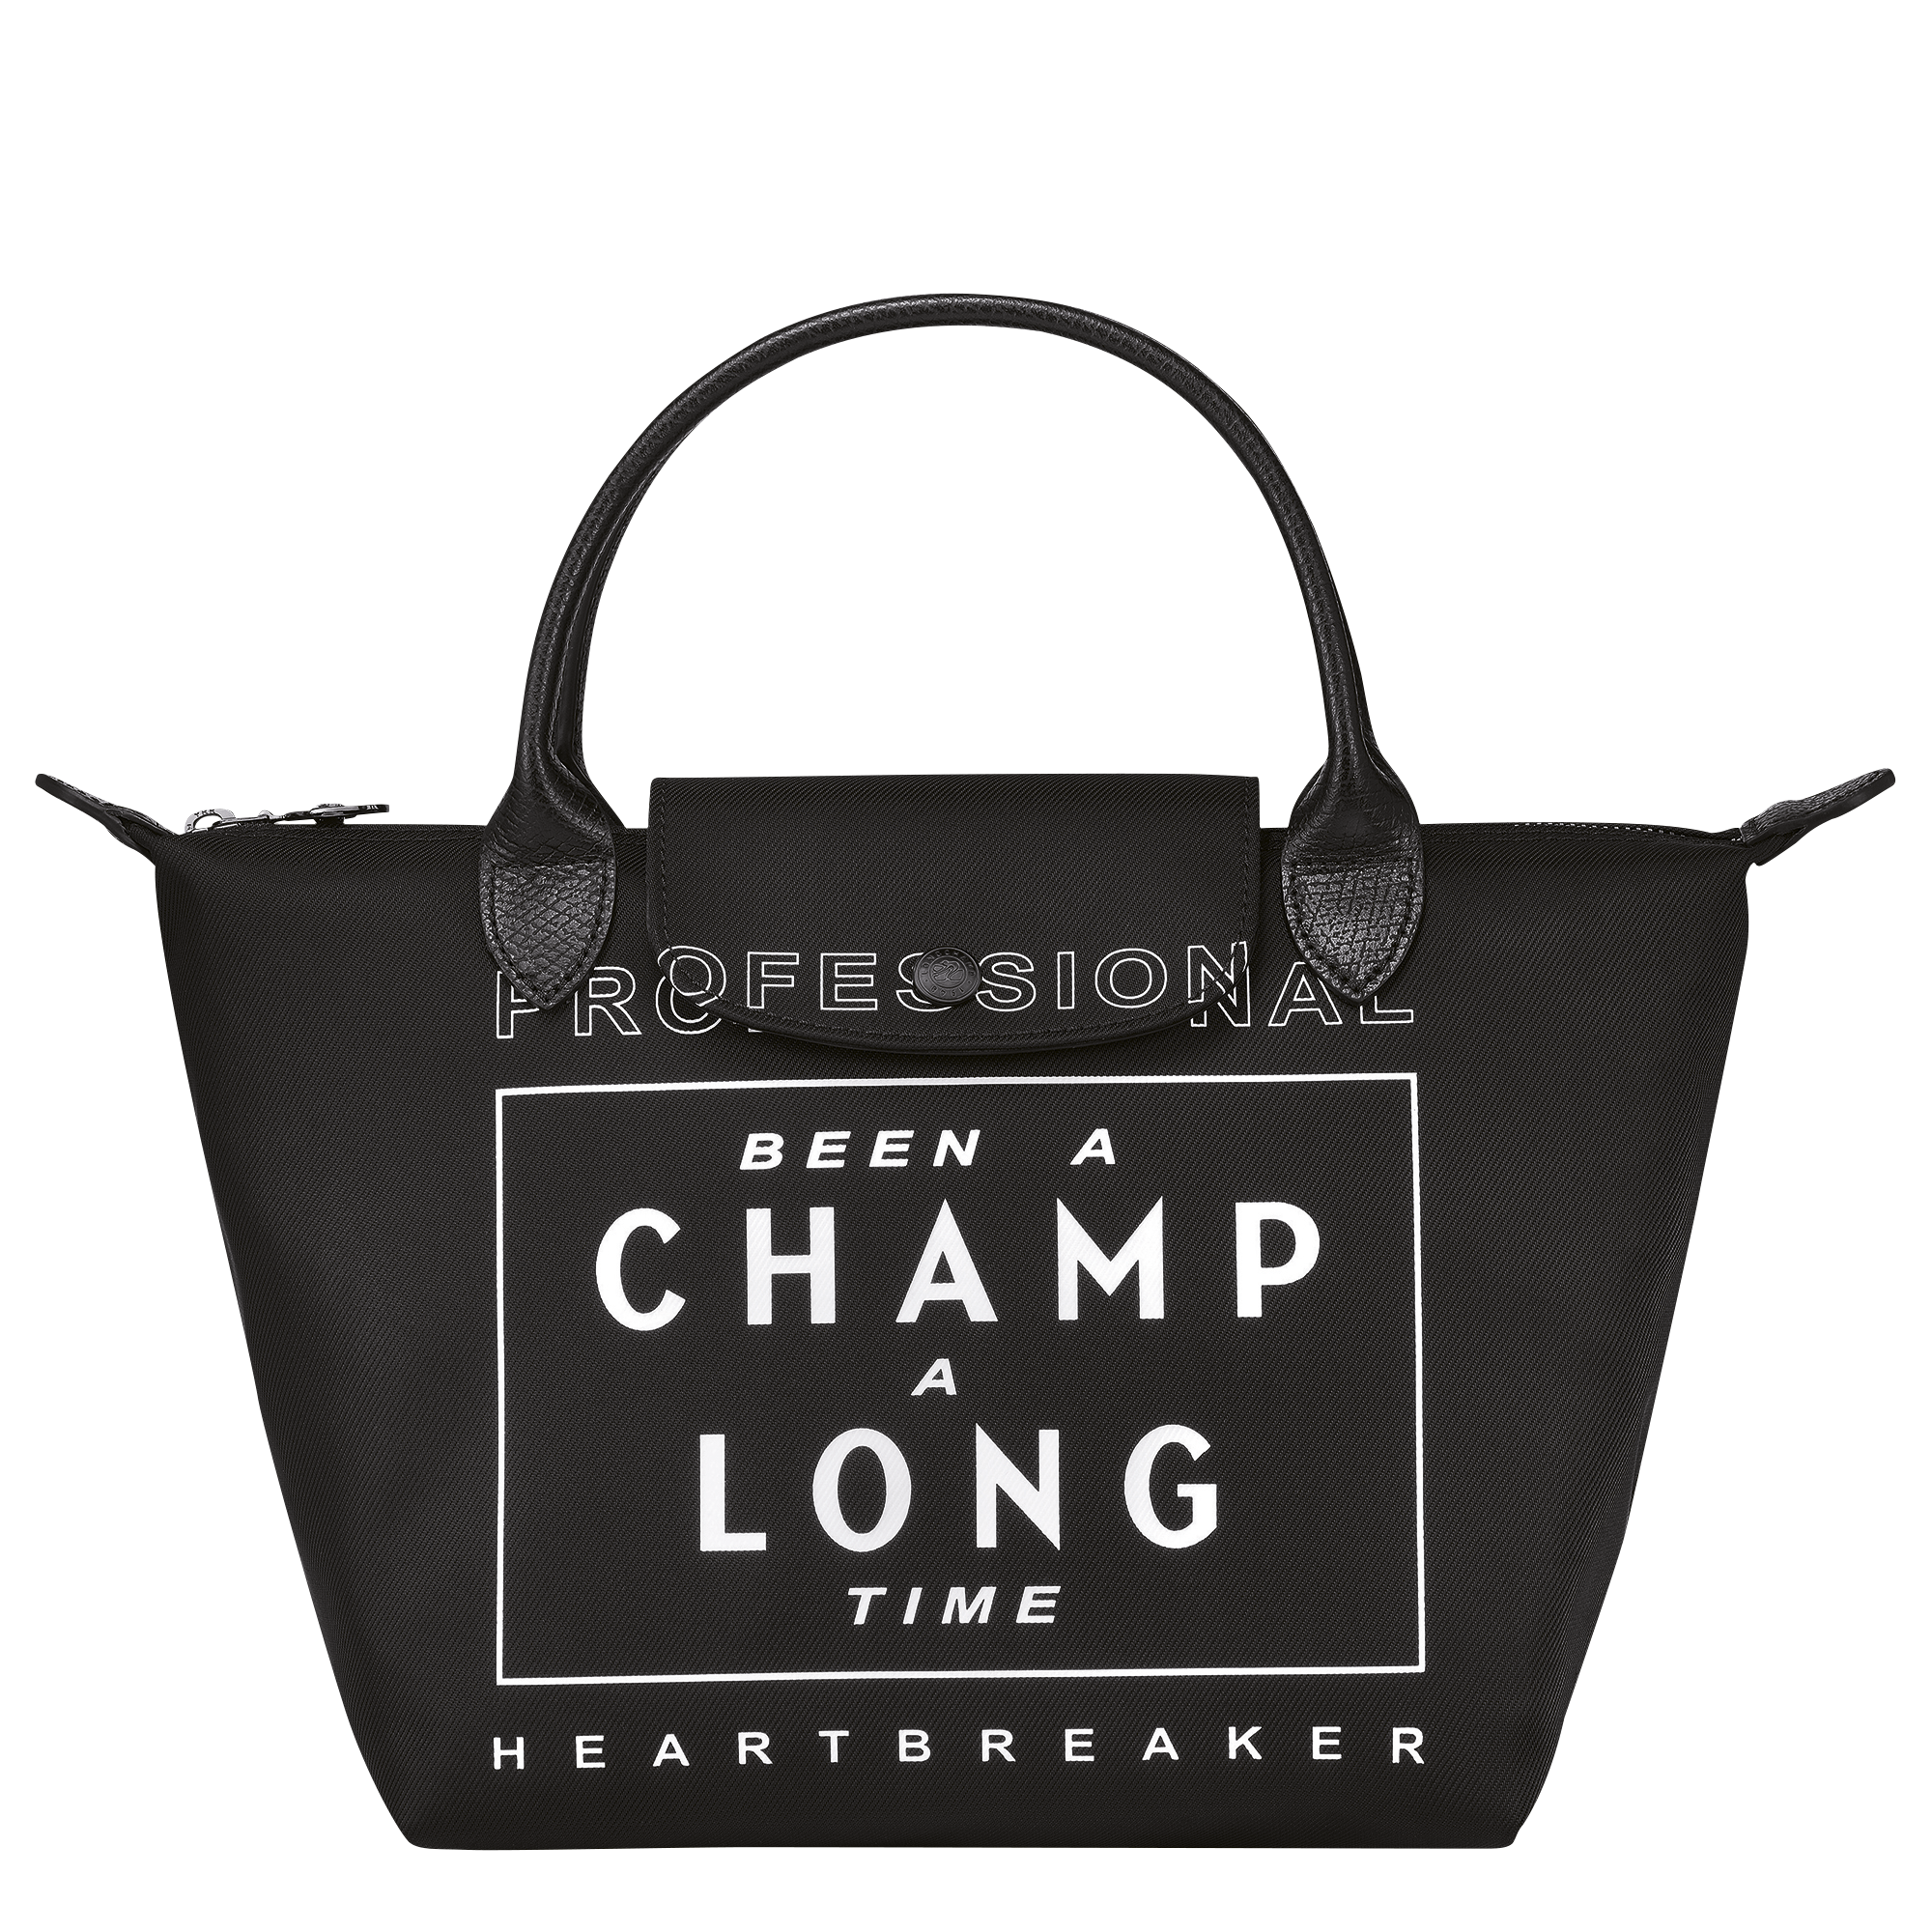 EU x Longchamp - Tophandle Bag (XS) – Emotionally Unavailable